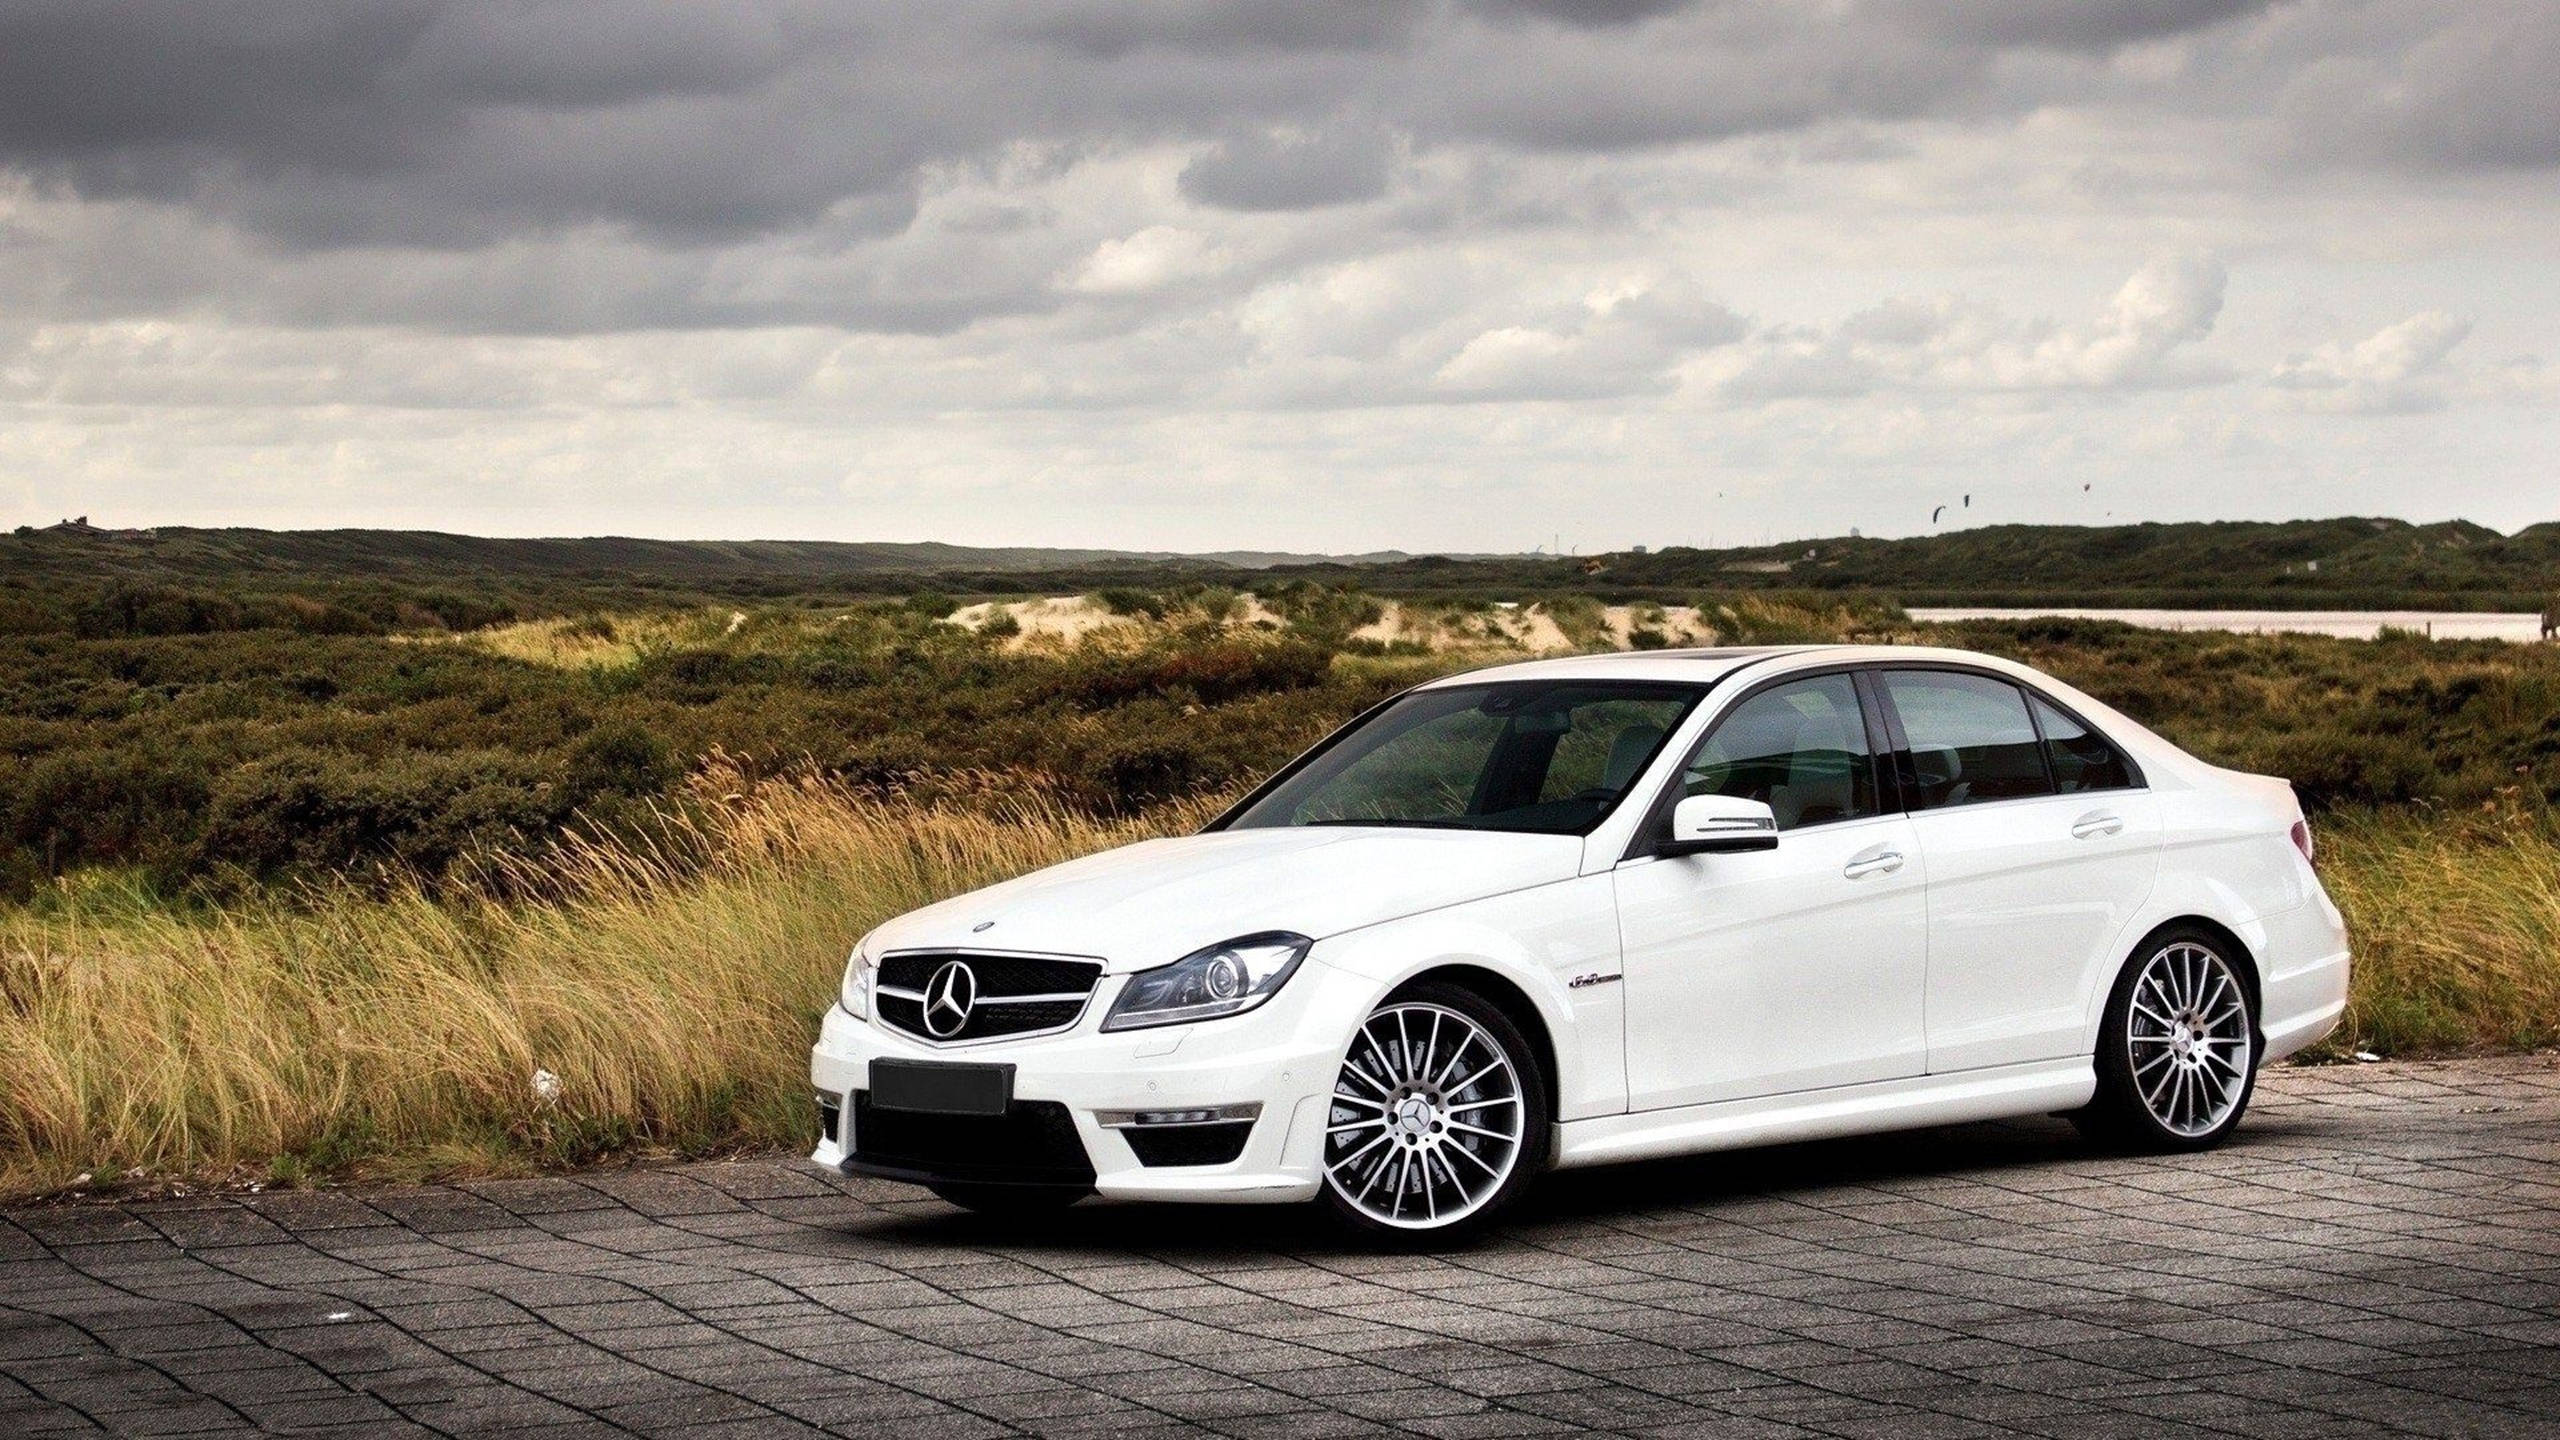 Captivating Luxury: Mercedes Benz Hd